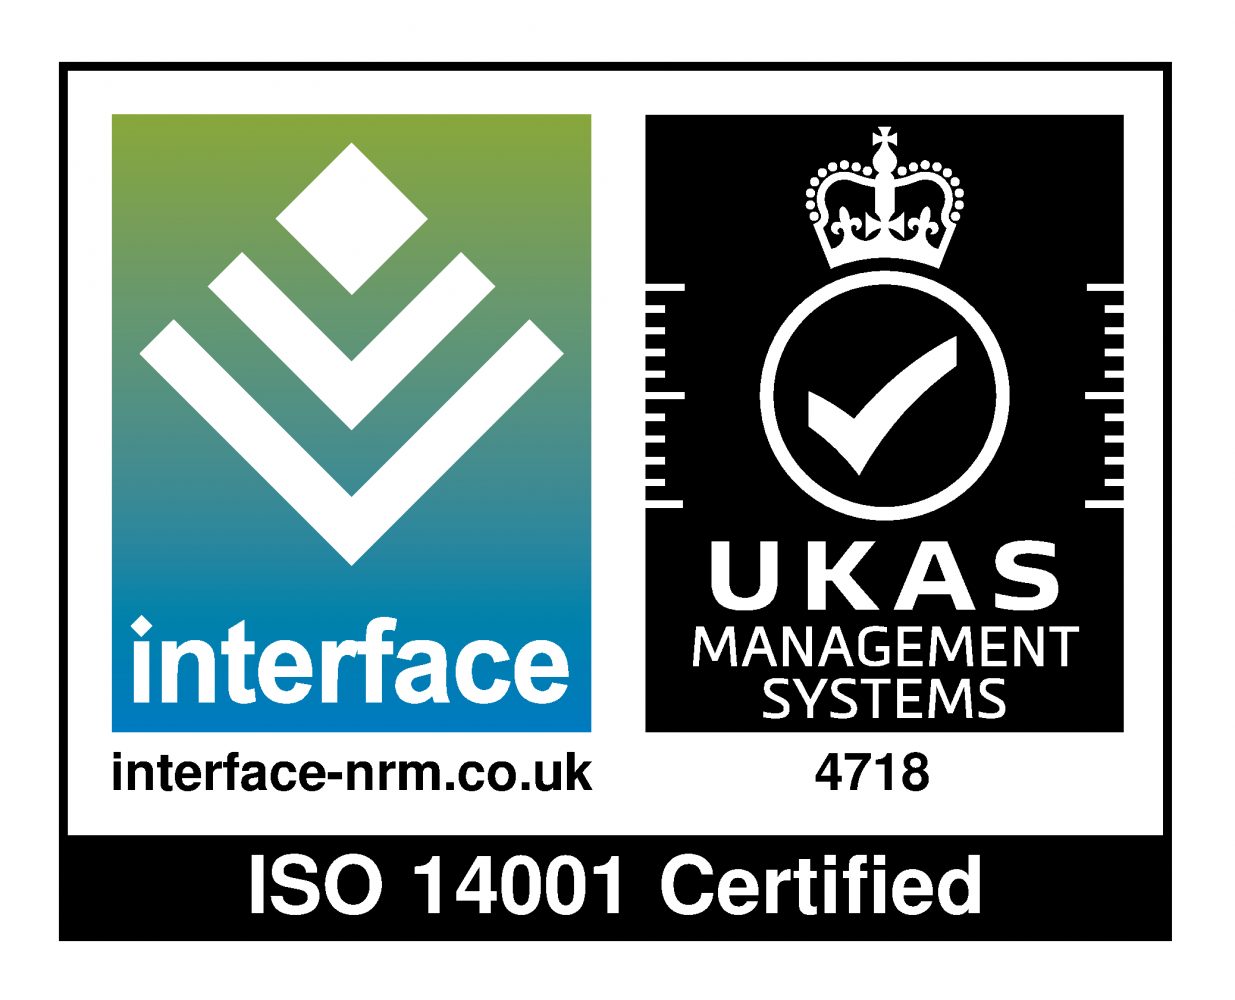 ISO14001 Logo